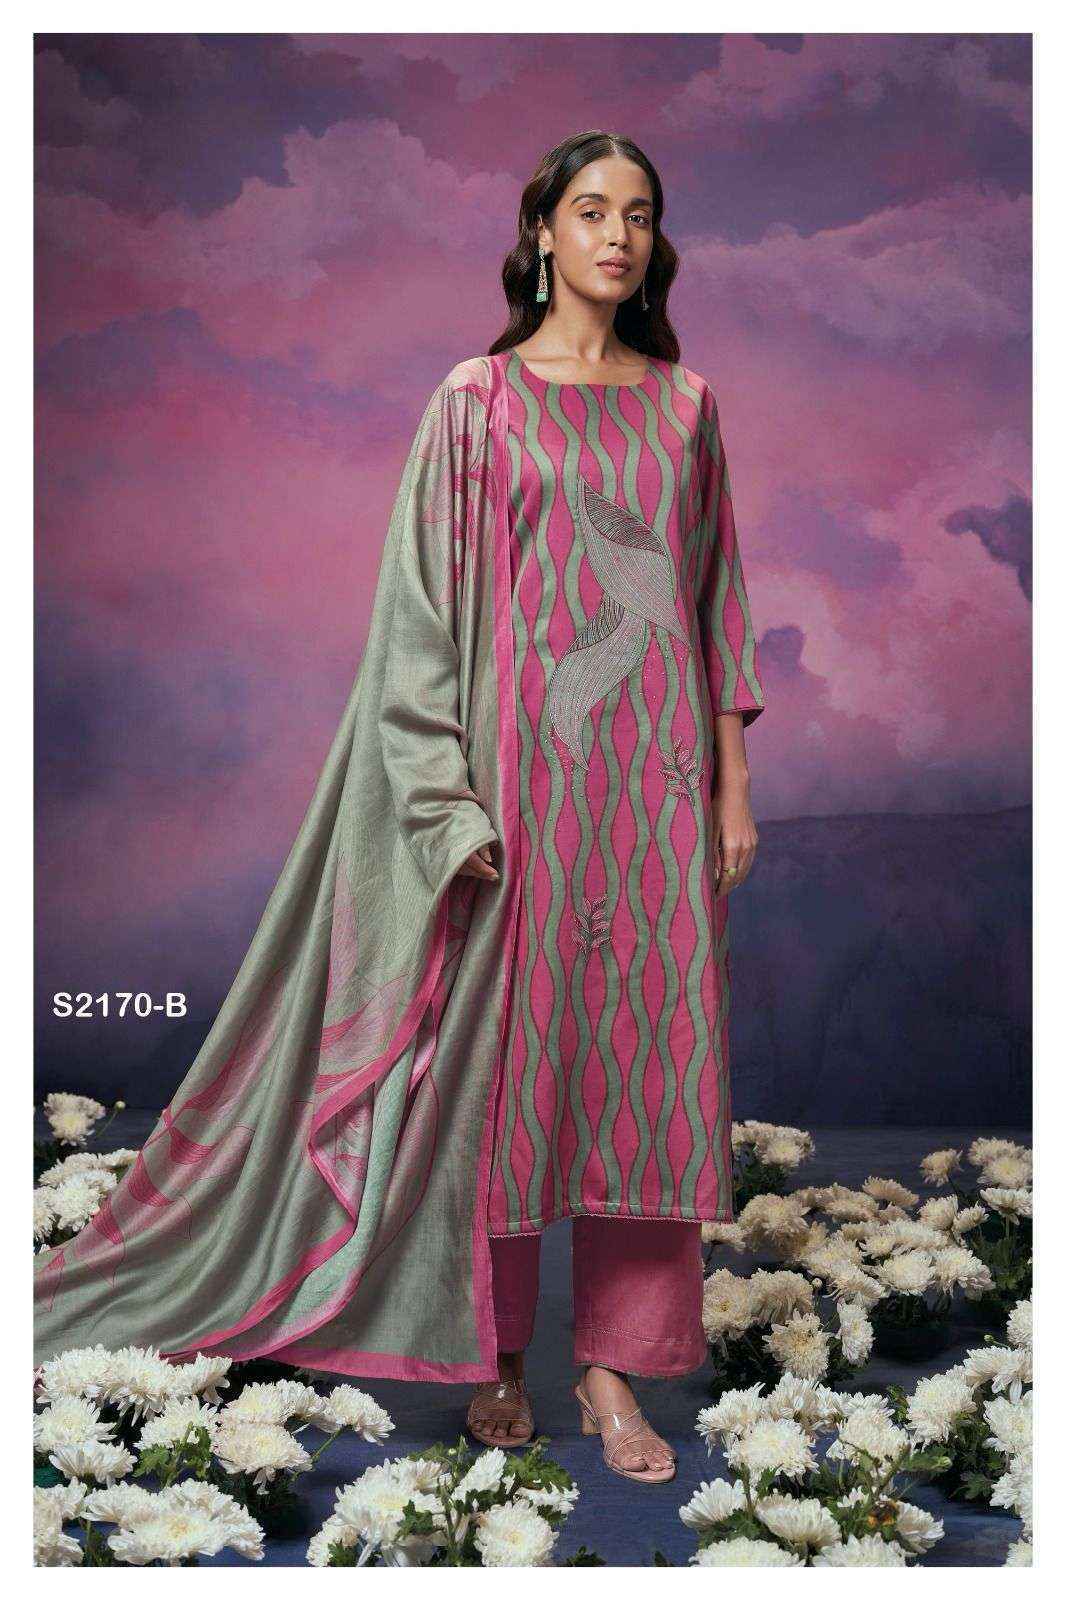 Ganga Ottilie 2170 Cotton Silk Dress Material 4 pcs Catalogue